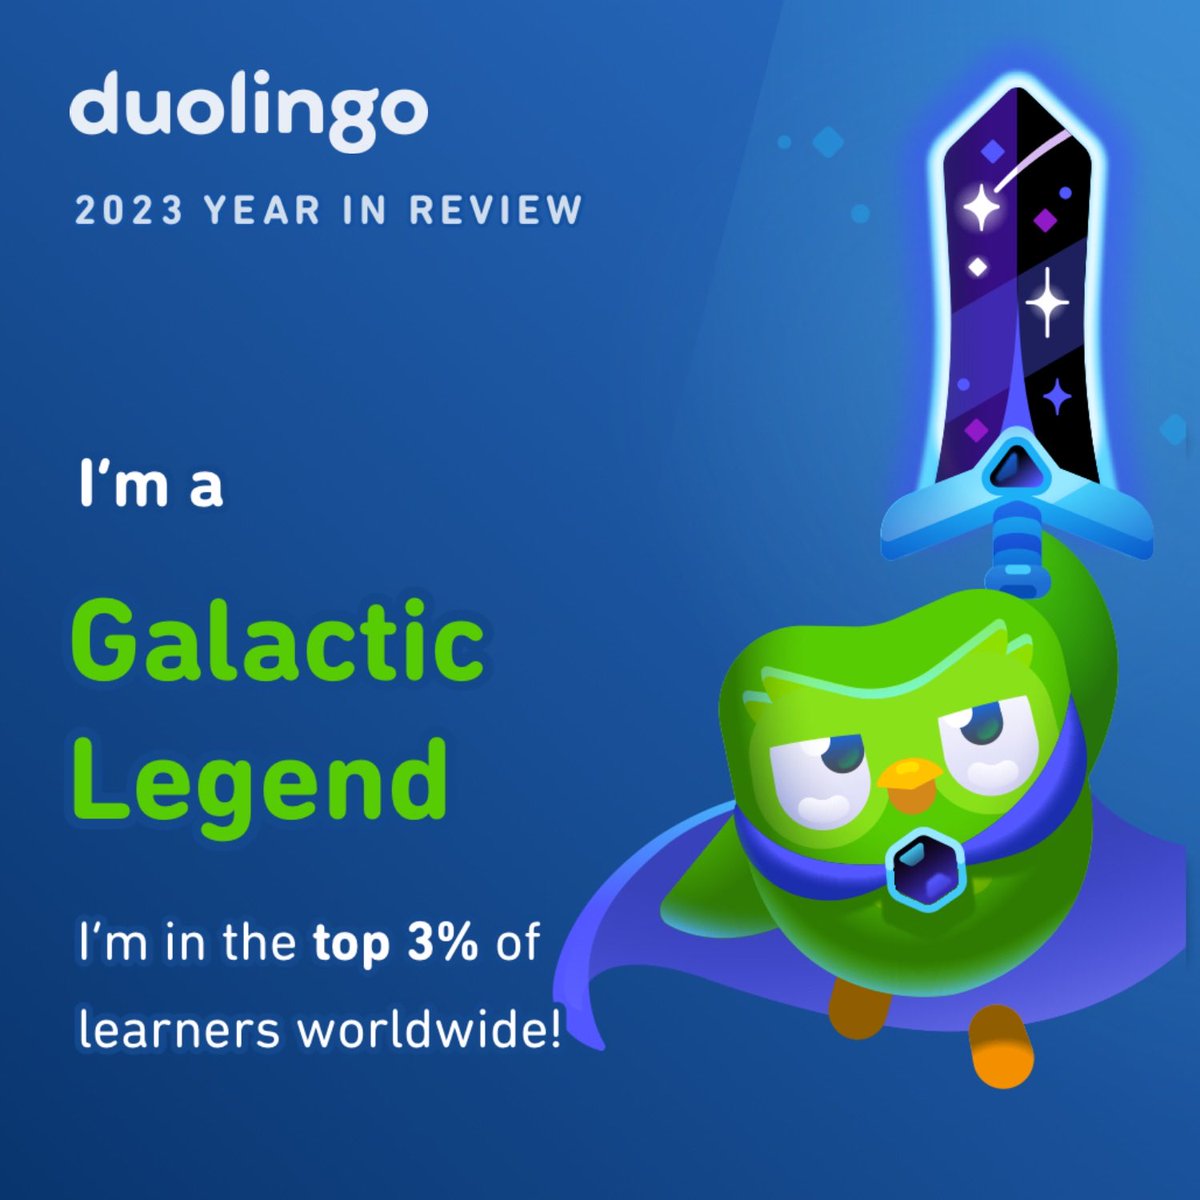 I’m a Galactic Legend! What’s your Duolingo learner style? #Duolingo365